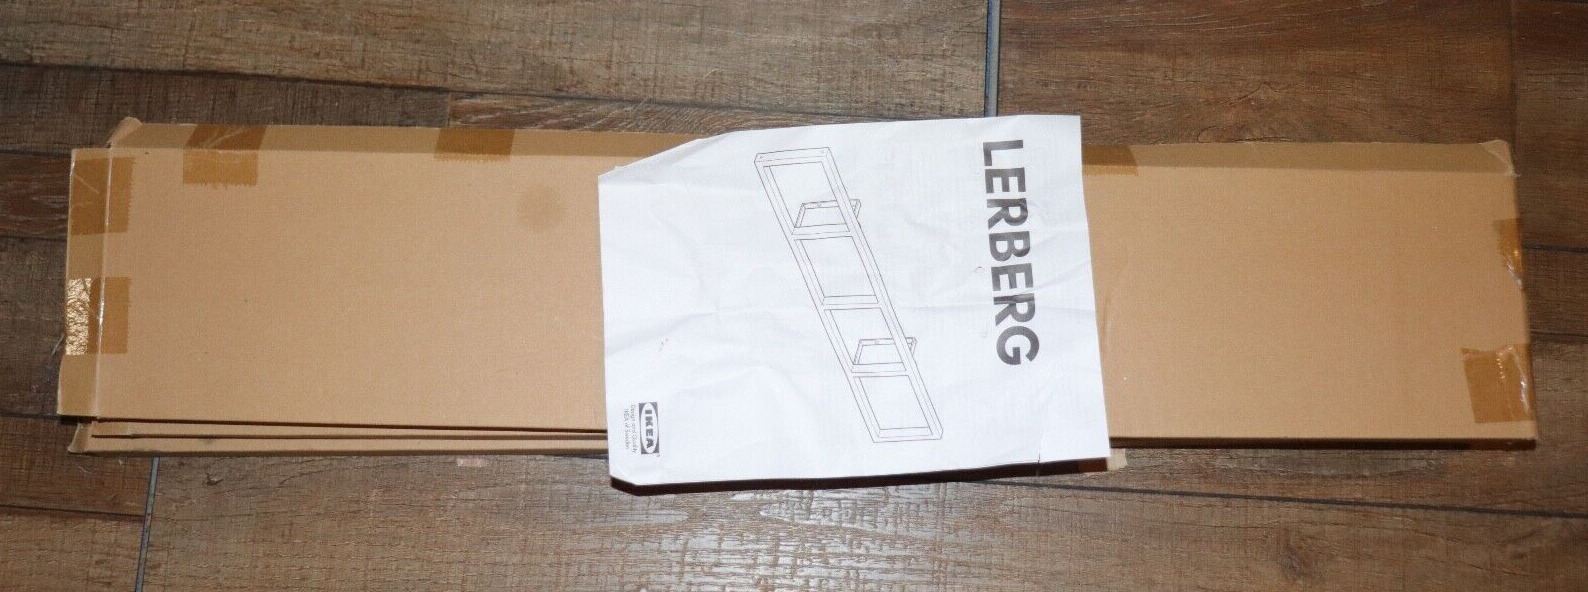 IKEA Lerberg Wall Mounted Metal CD DVD Shelf Rack 10035